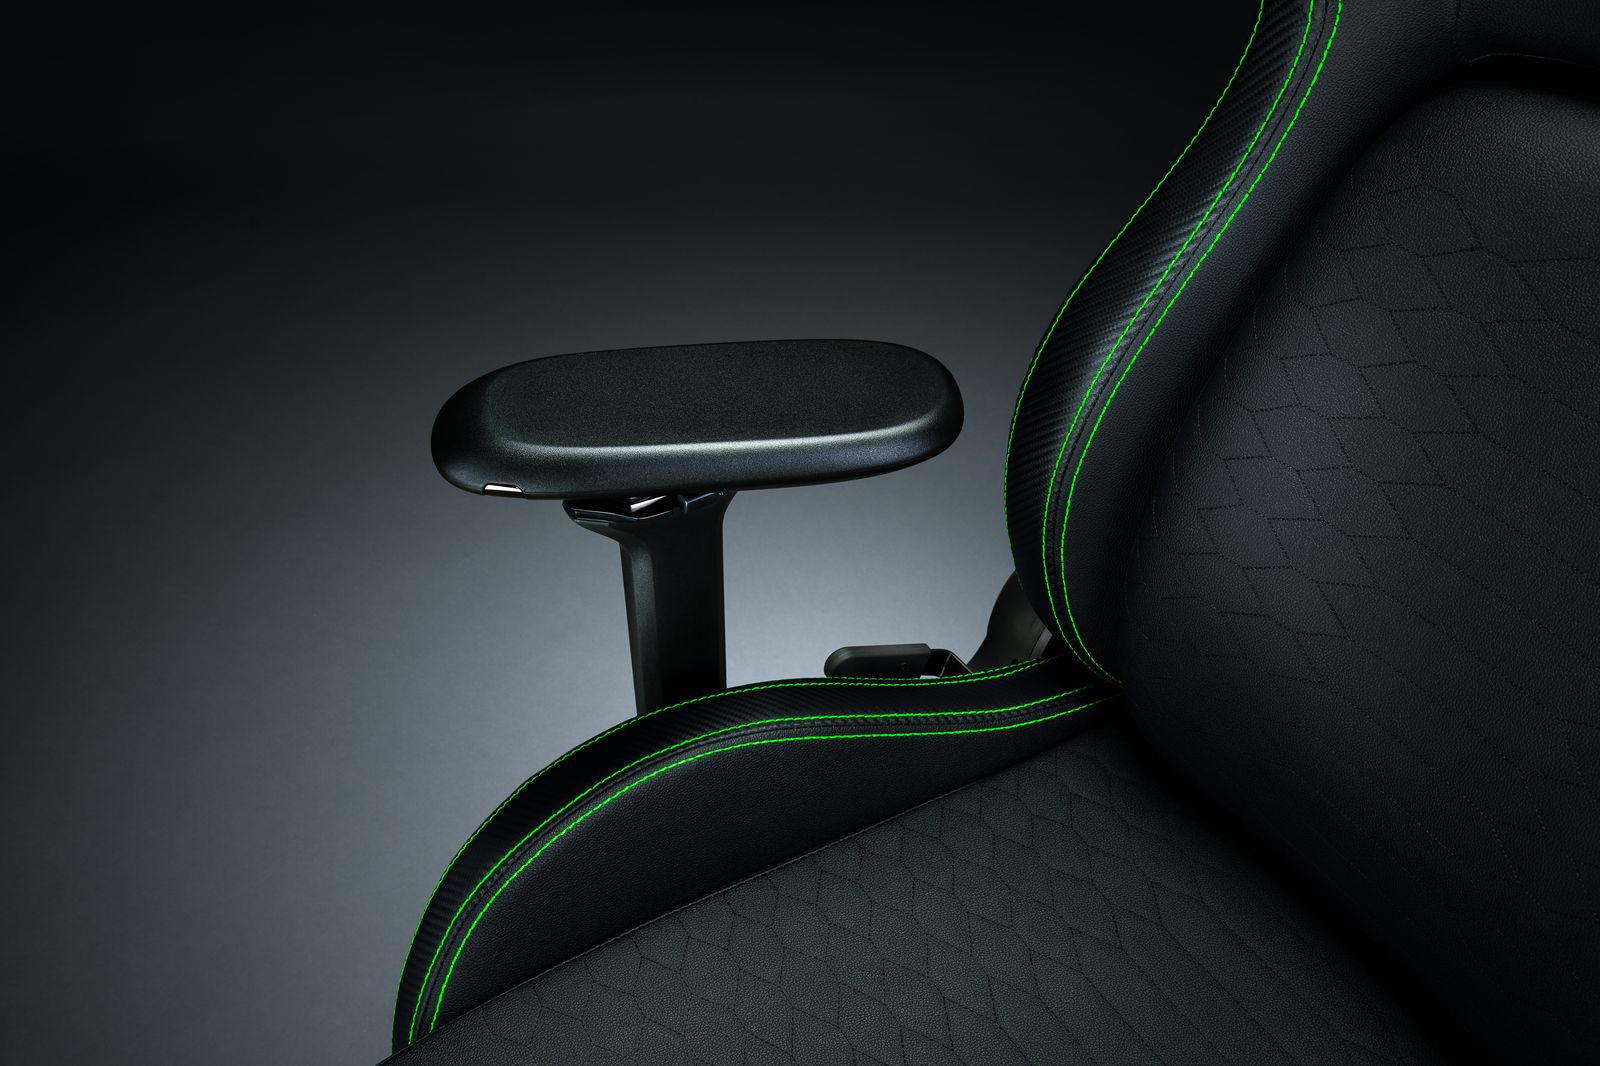 Razer Iskur Gaming Chair, green XL